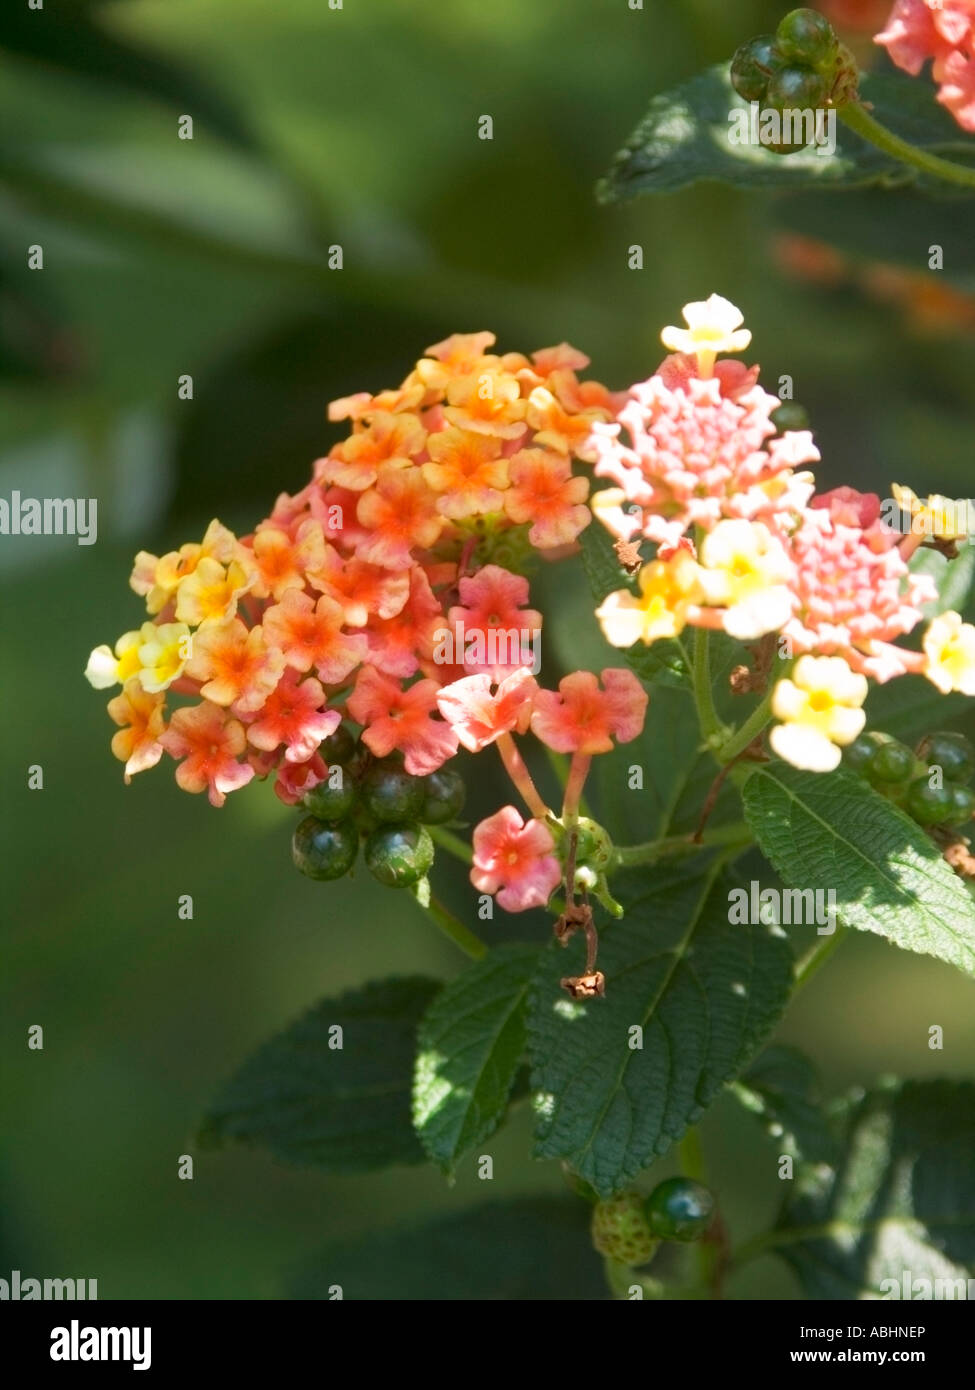 Lantana flower Stock Photo